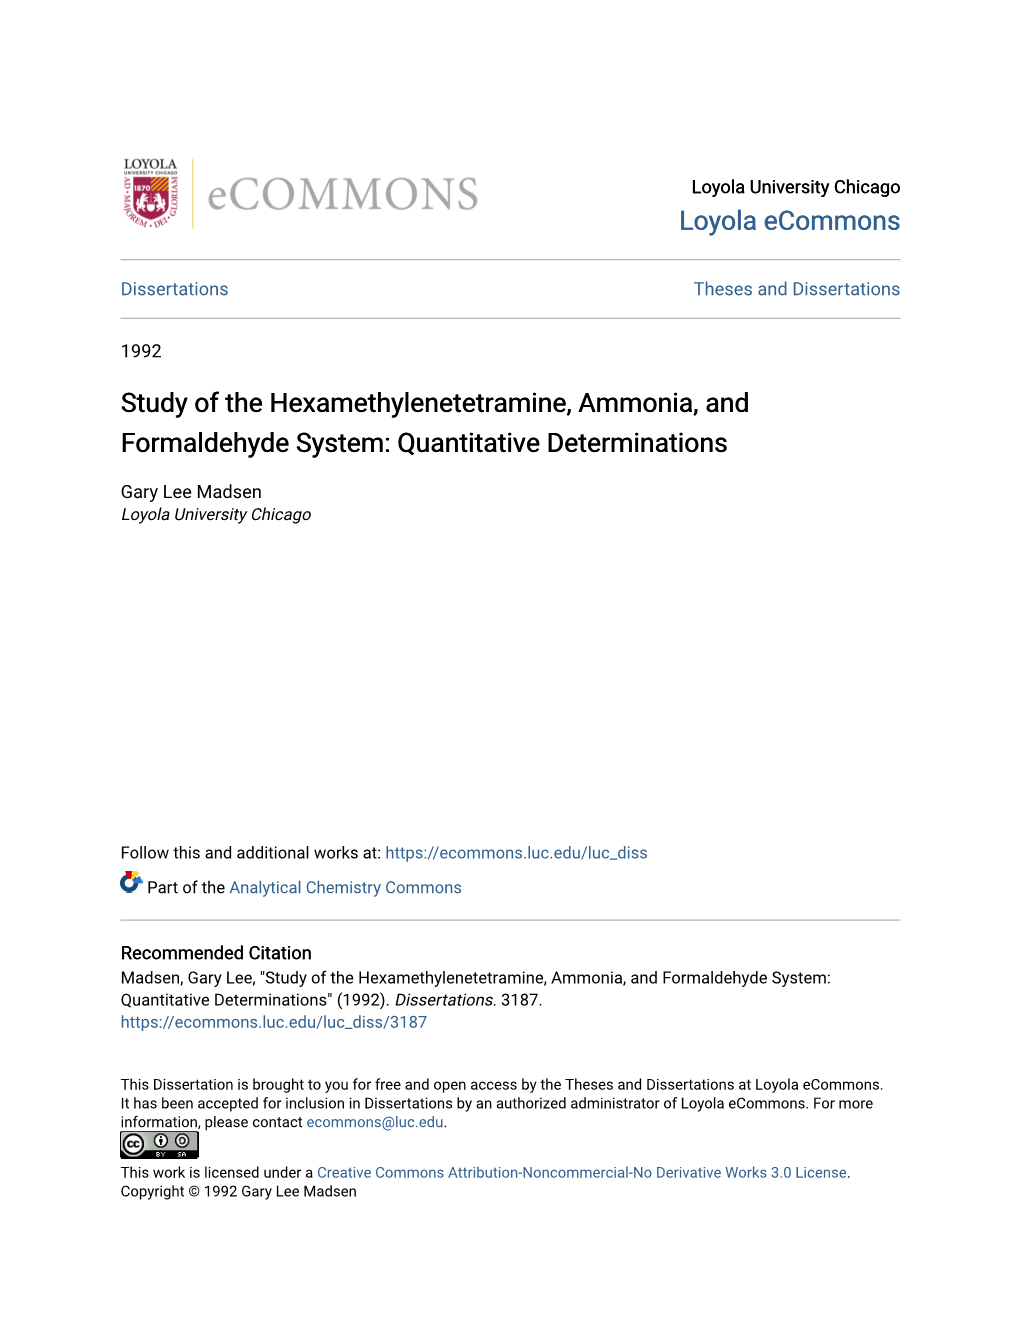 Study of the Hexamethylenetetramine, Ammonia, and Formaldehyde System: Quantitative Determinations